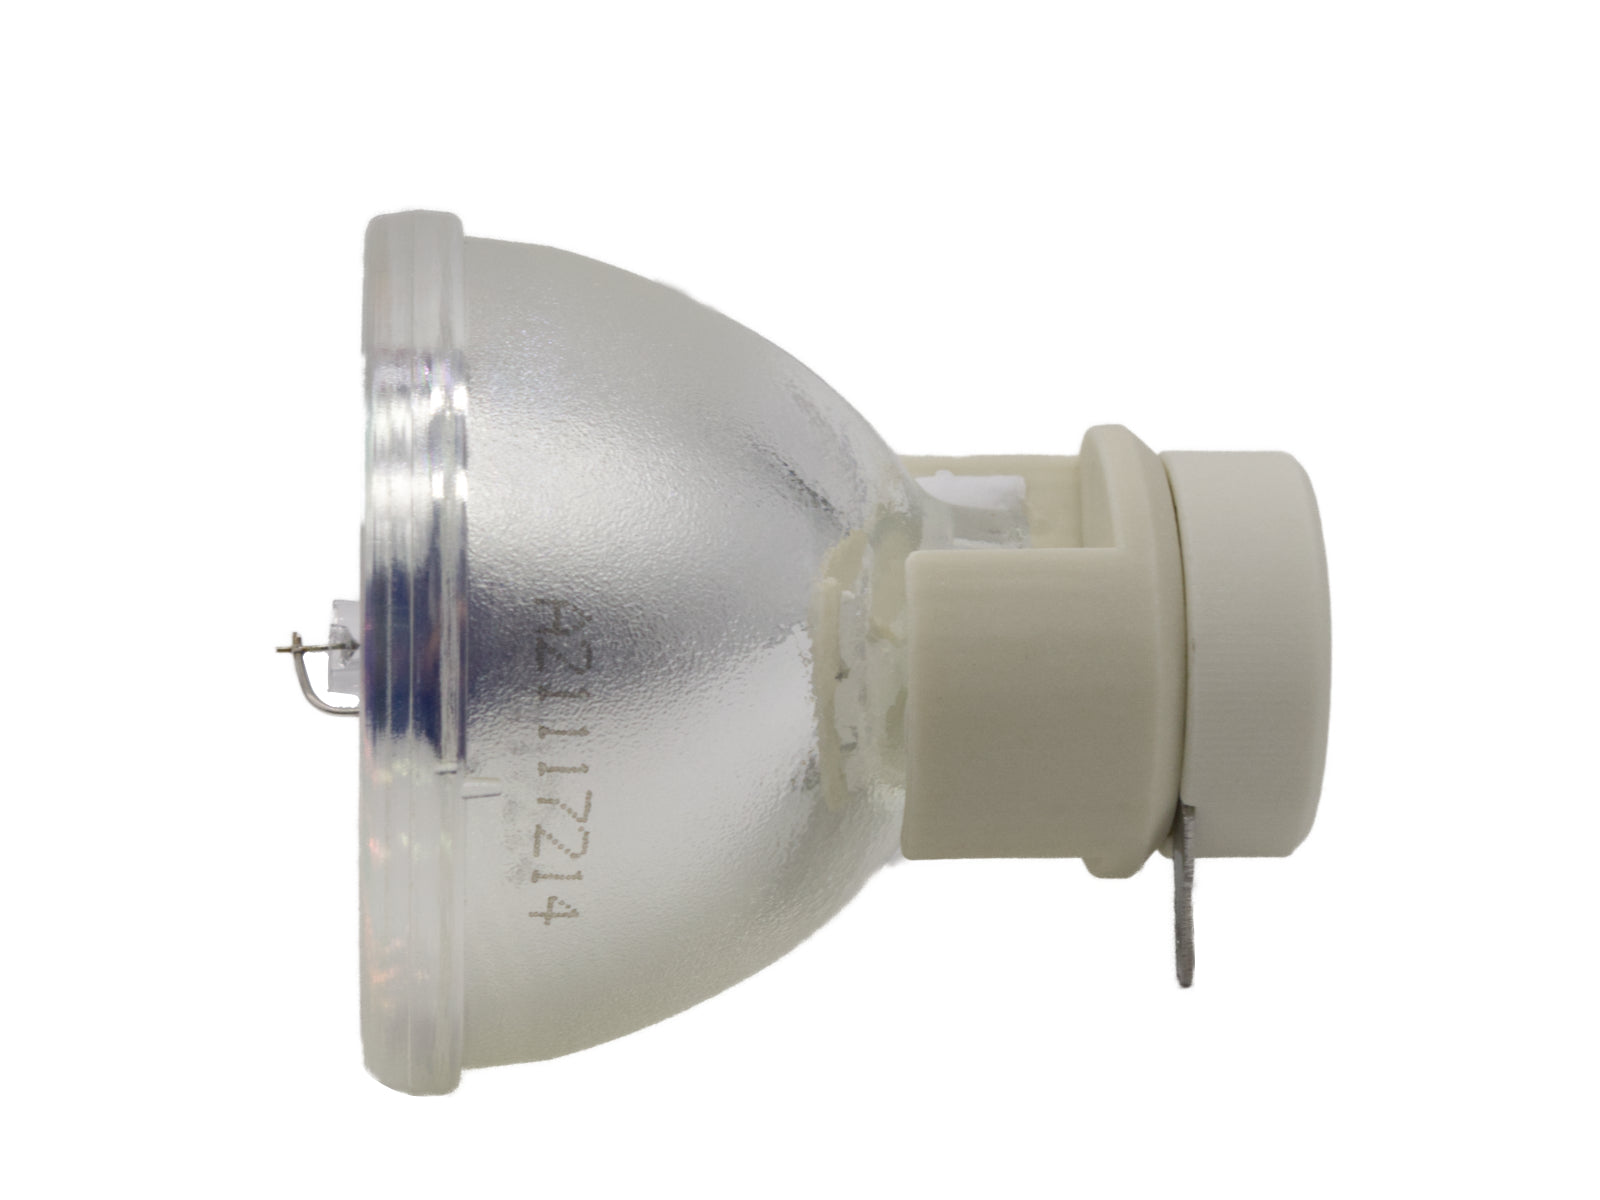 azurano Beamerlampe für ACER MC.JH411.002 Ersatzlampe Projektorlampe - Bild 7